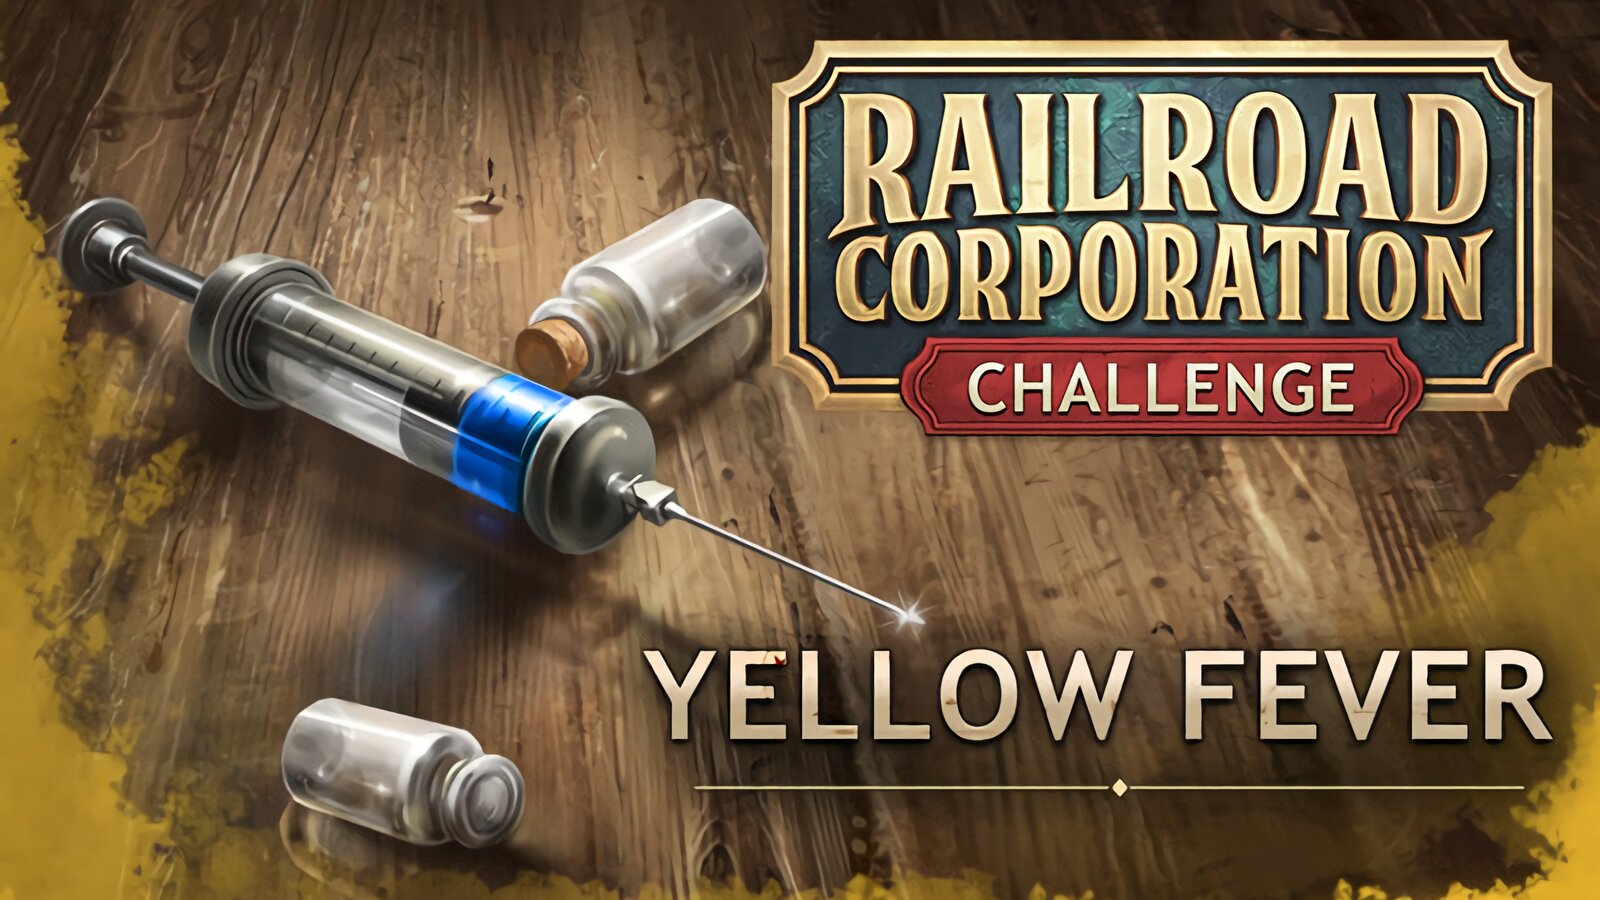 Railroad Corporation - Yellow Fever